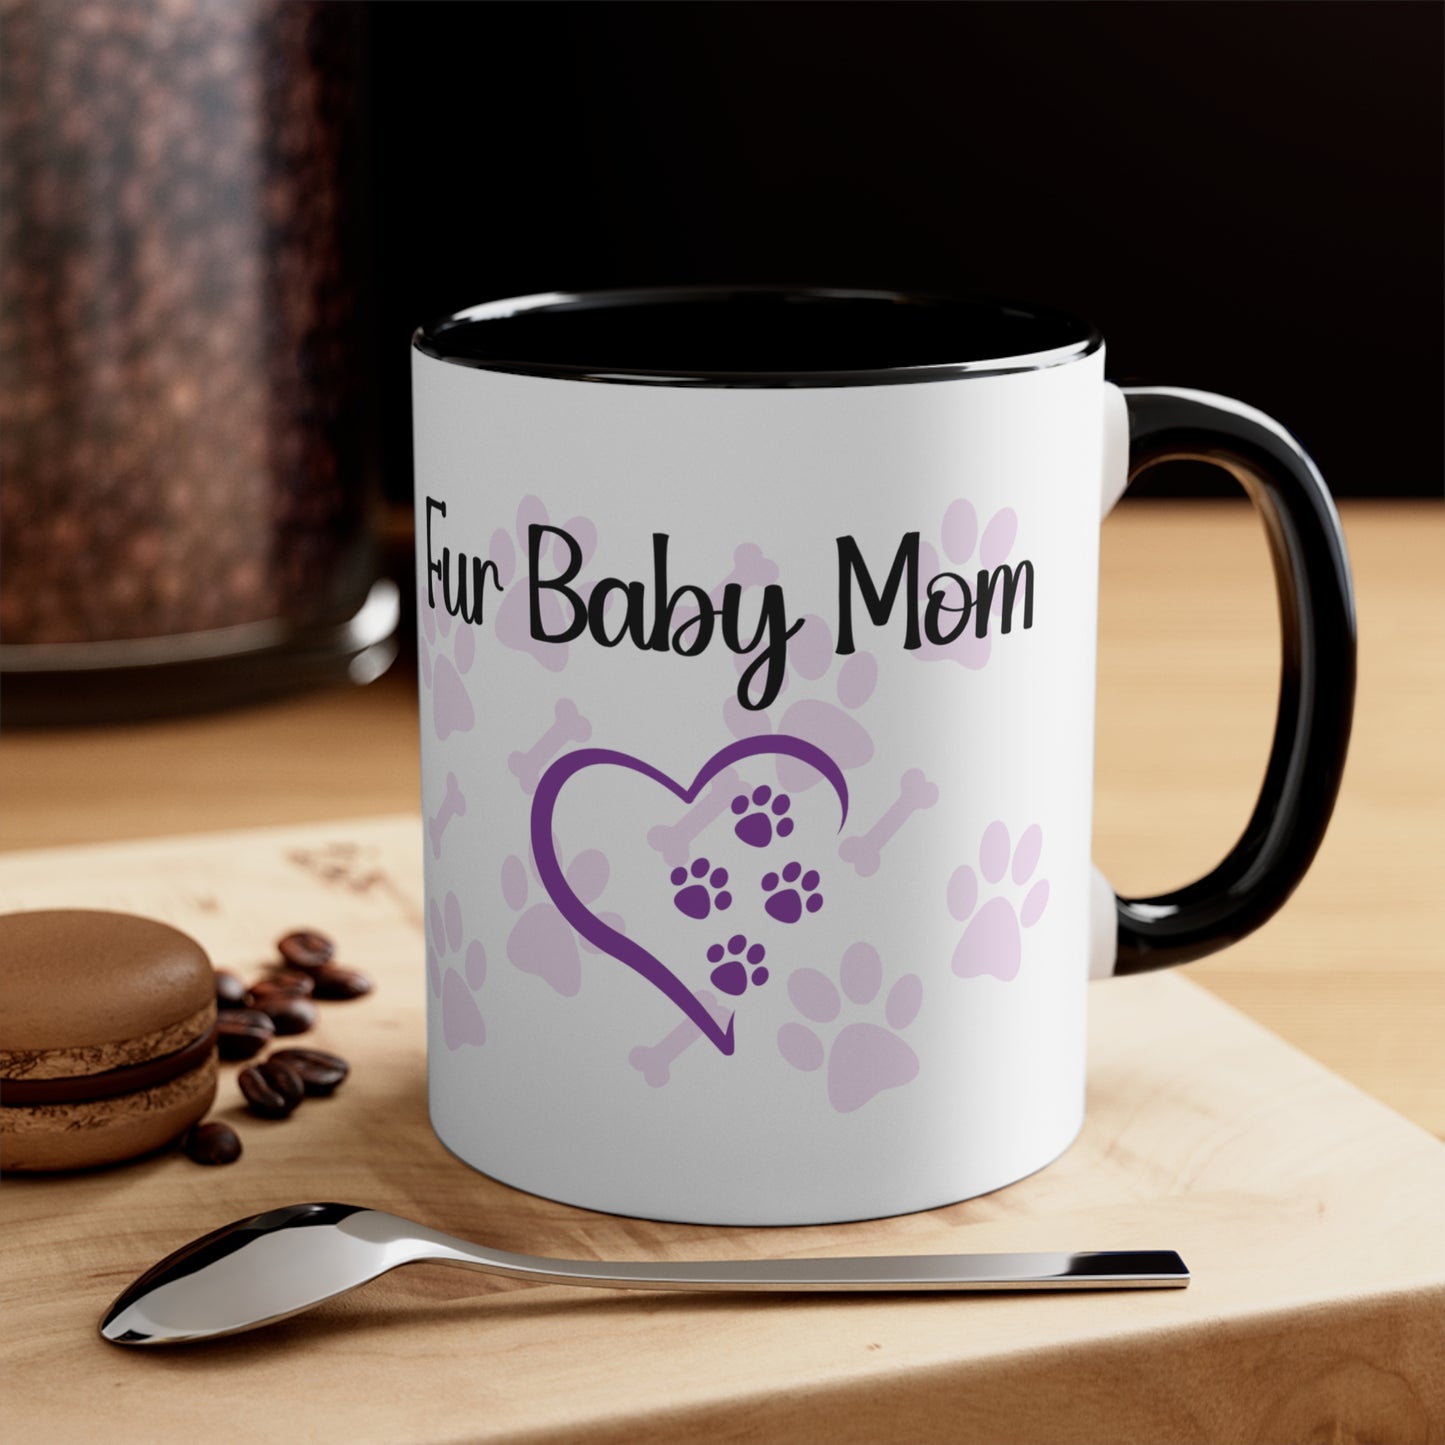 Fur baby mom coffee mug with paw prints 11 oz, front view.